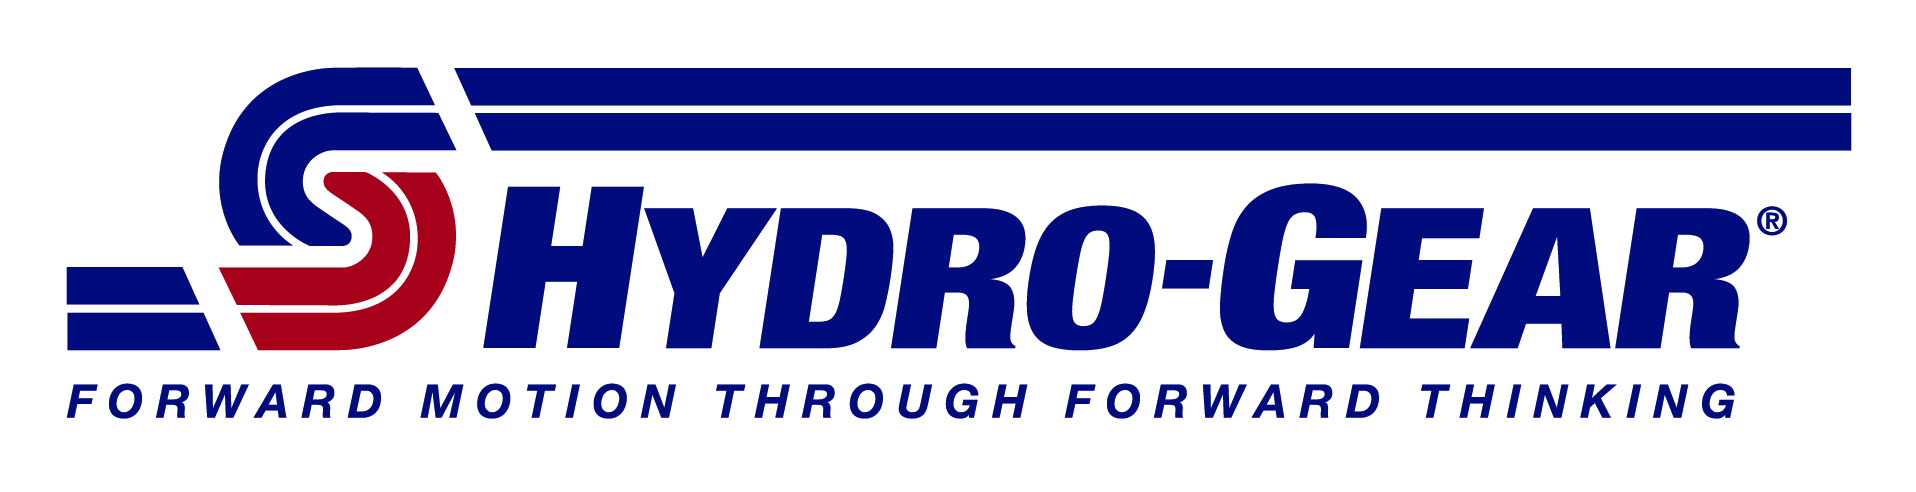 2020 Hydro-Gear 2C TAGLINE